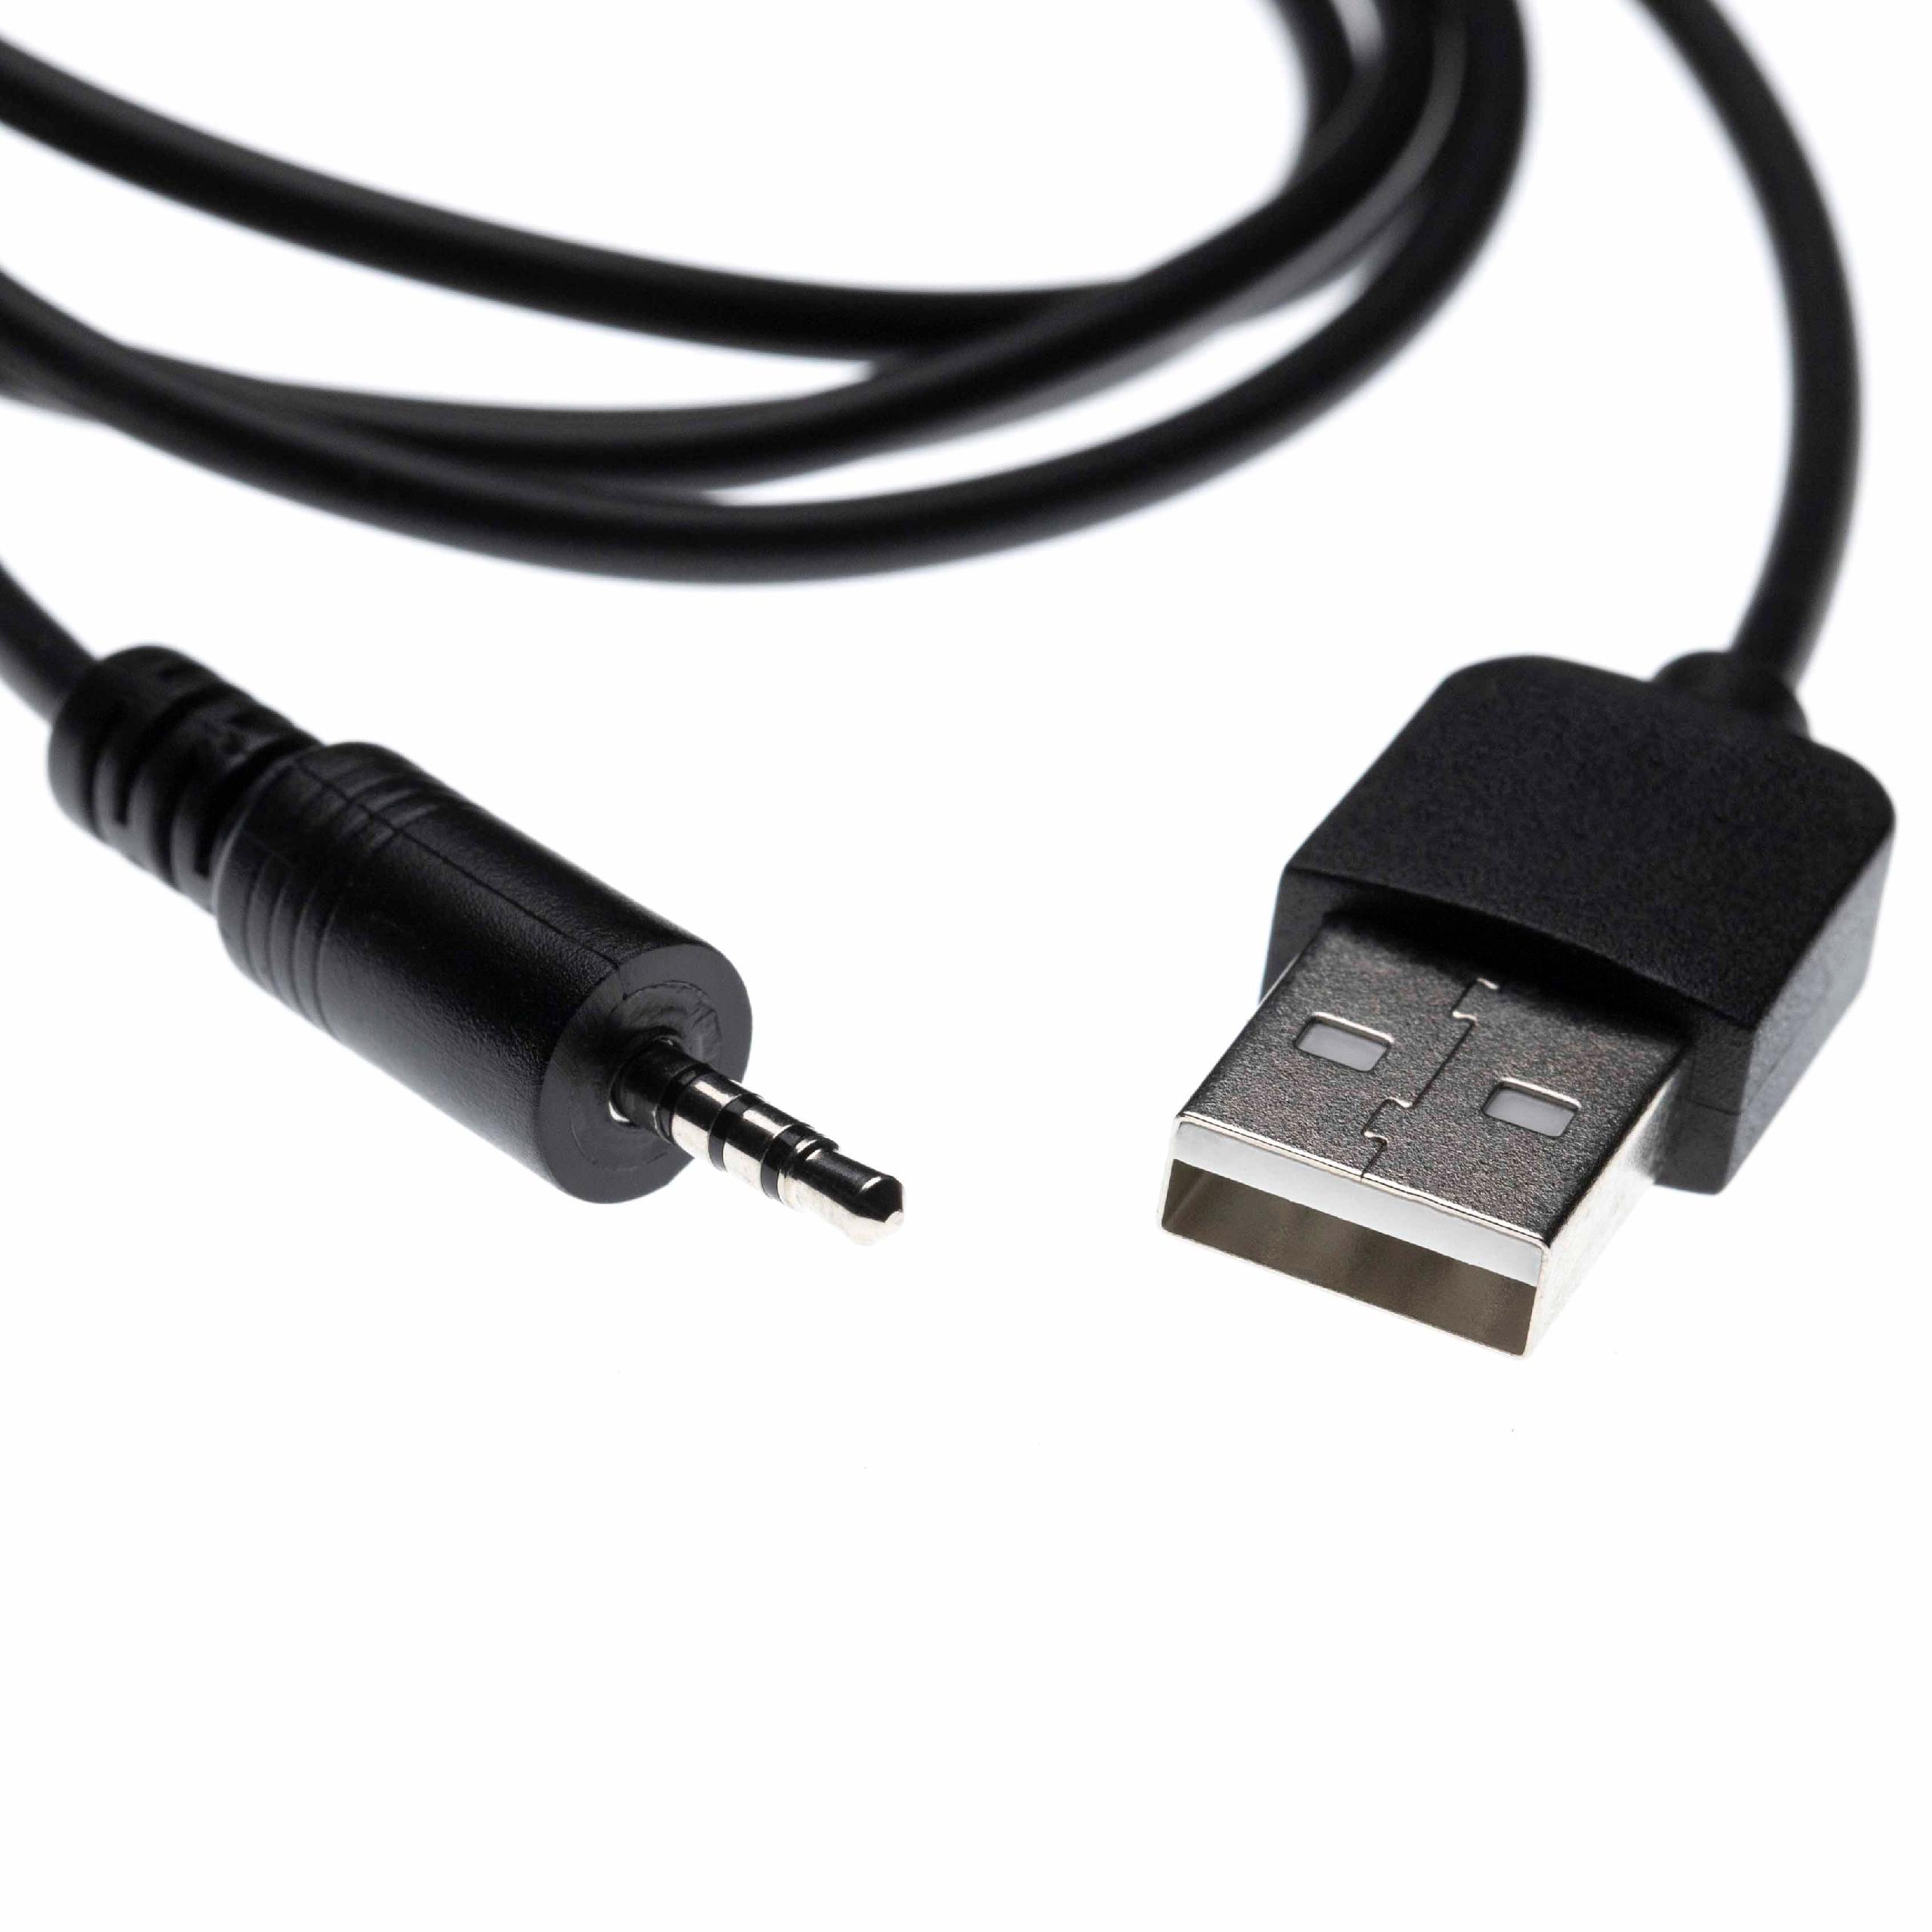 USB Charging Cable to 2.5 mm Audio Jack as Replacement for AKG / JBL / Harman Kardon K495NC Headphones etc., B